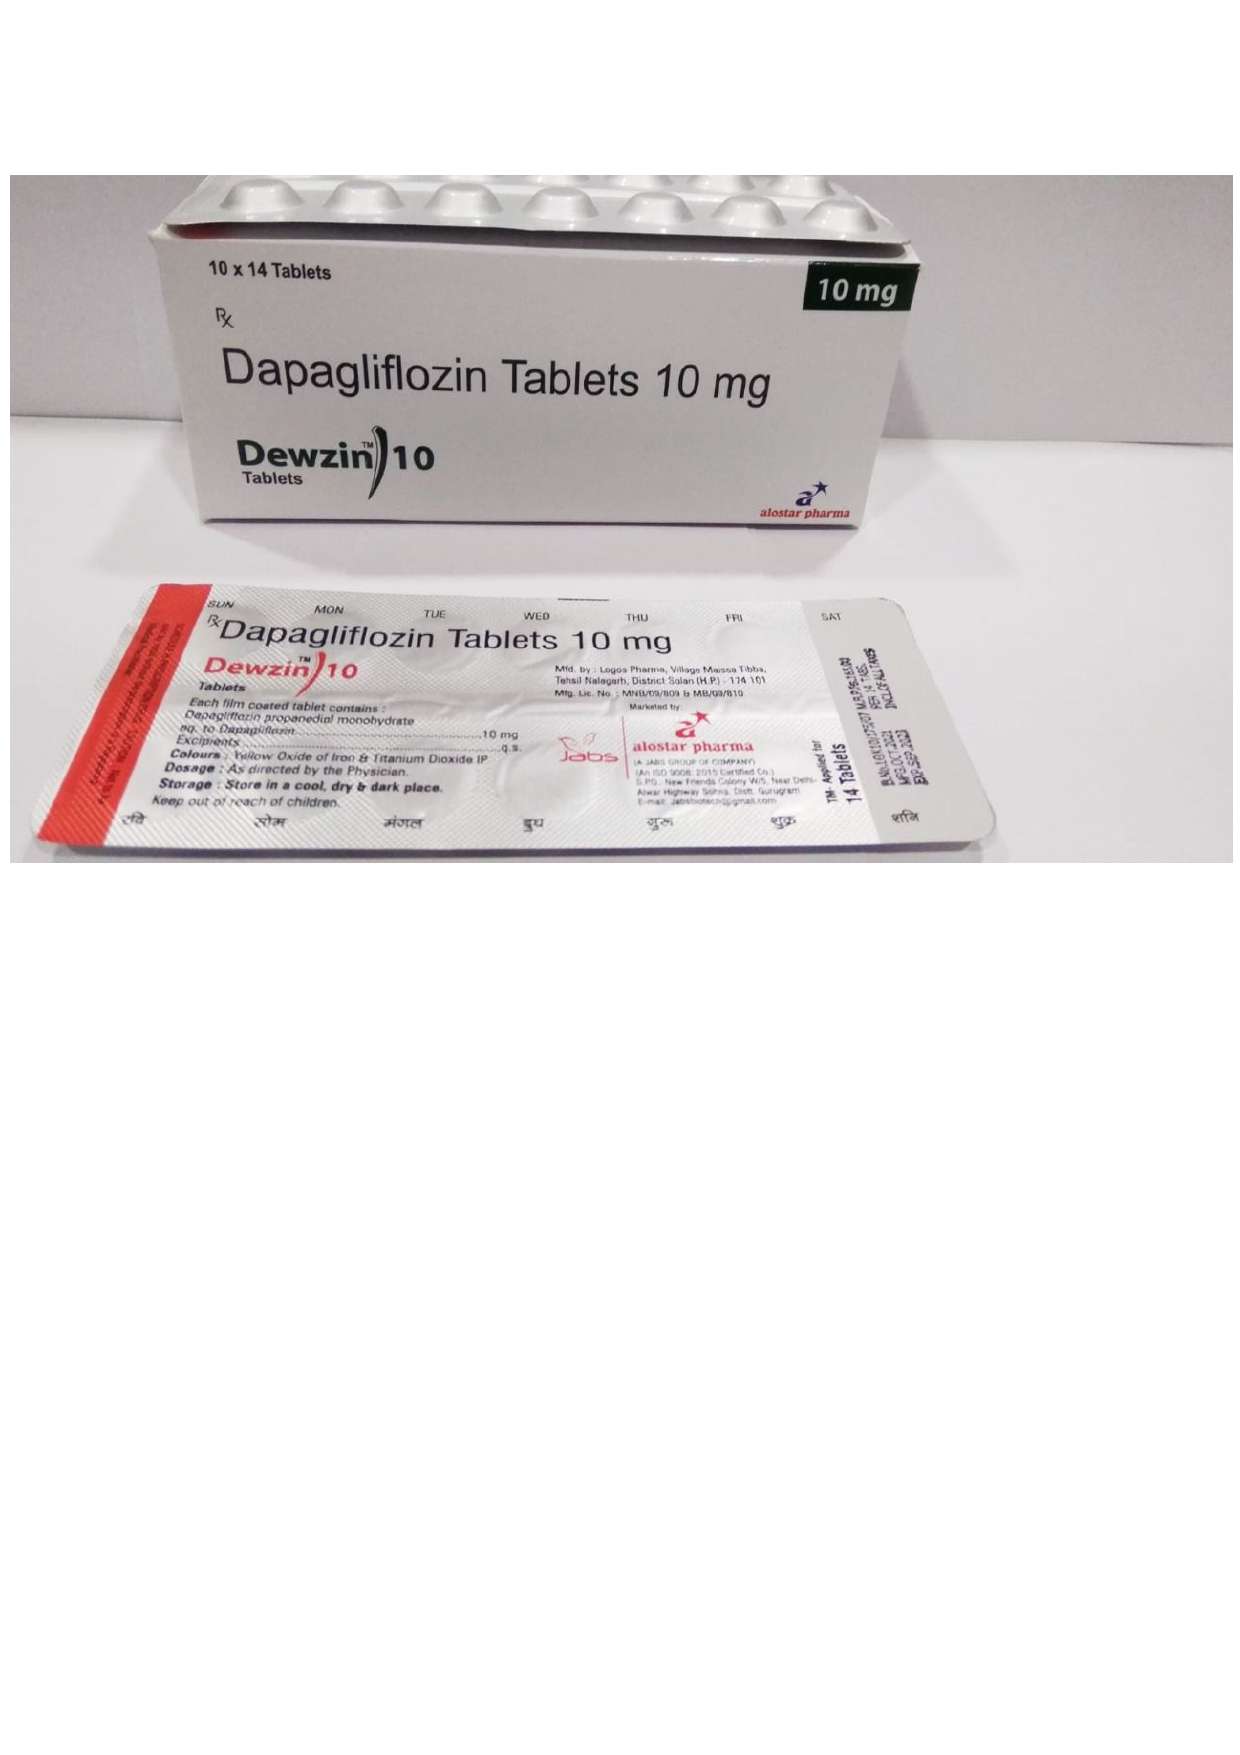 dapagliflozin tablets 10mg